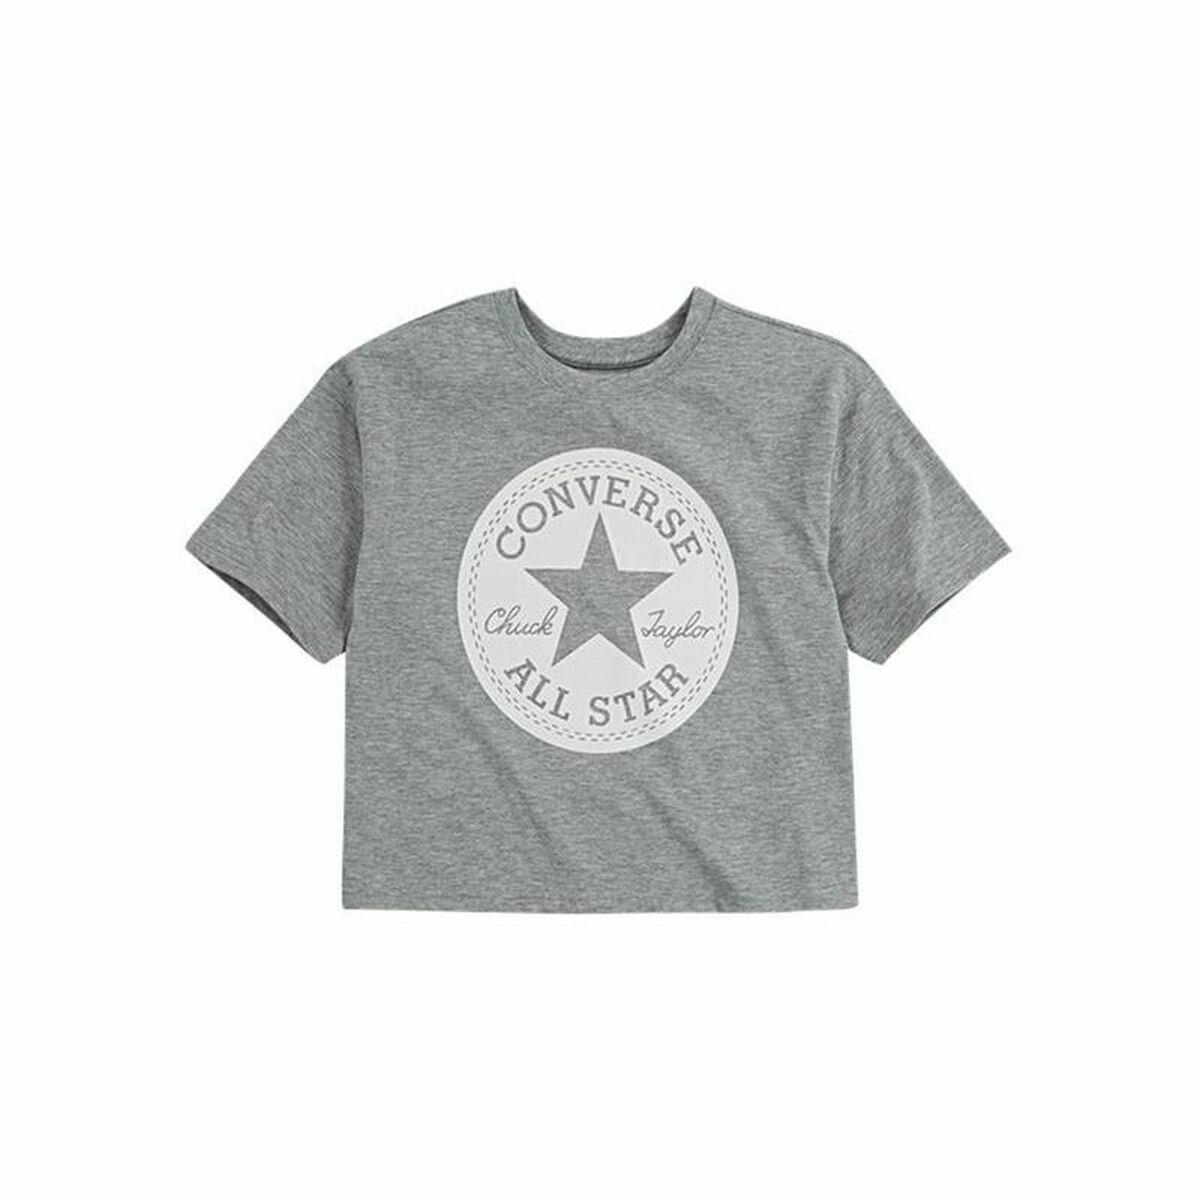 Kurzarm-T-Shirt für Kinder Converse Chuck Tomorrow, - Café Kitsch Patch ehemals Grau Boxy Café